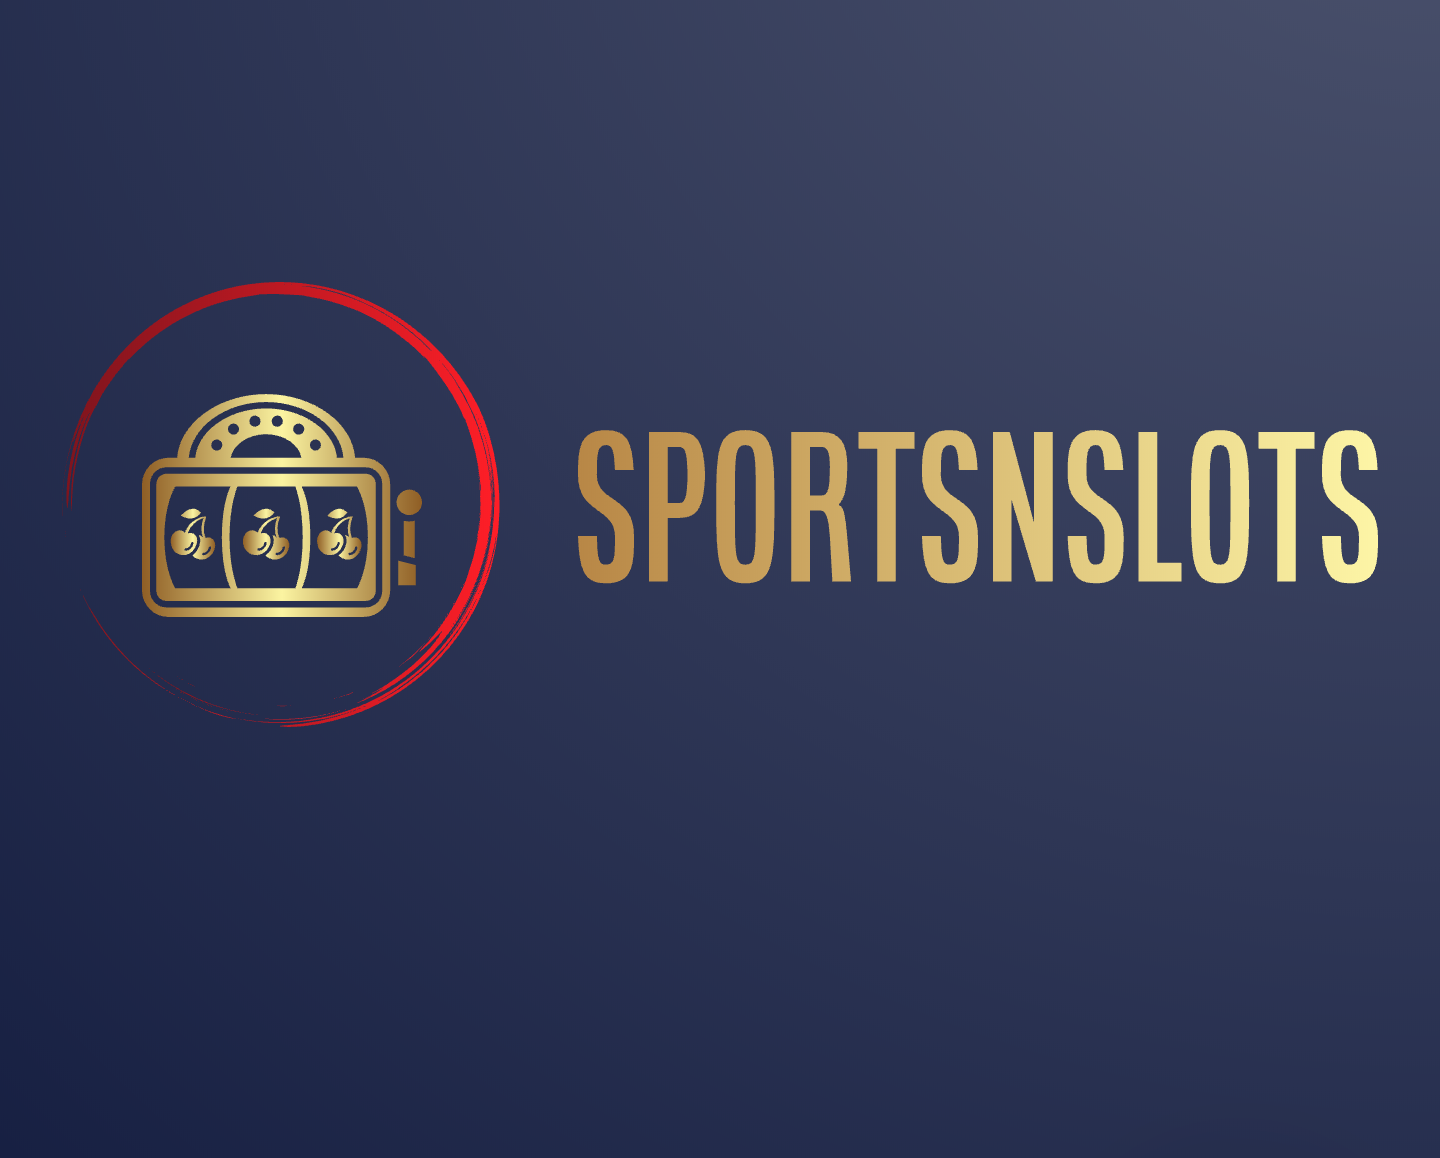 Sportsnslots logo